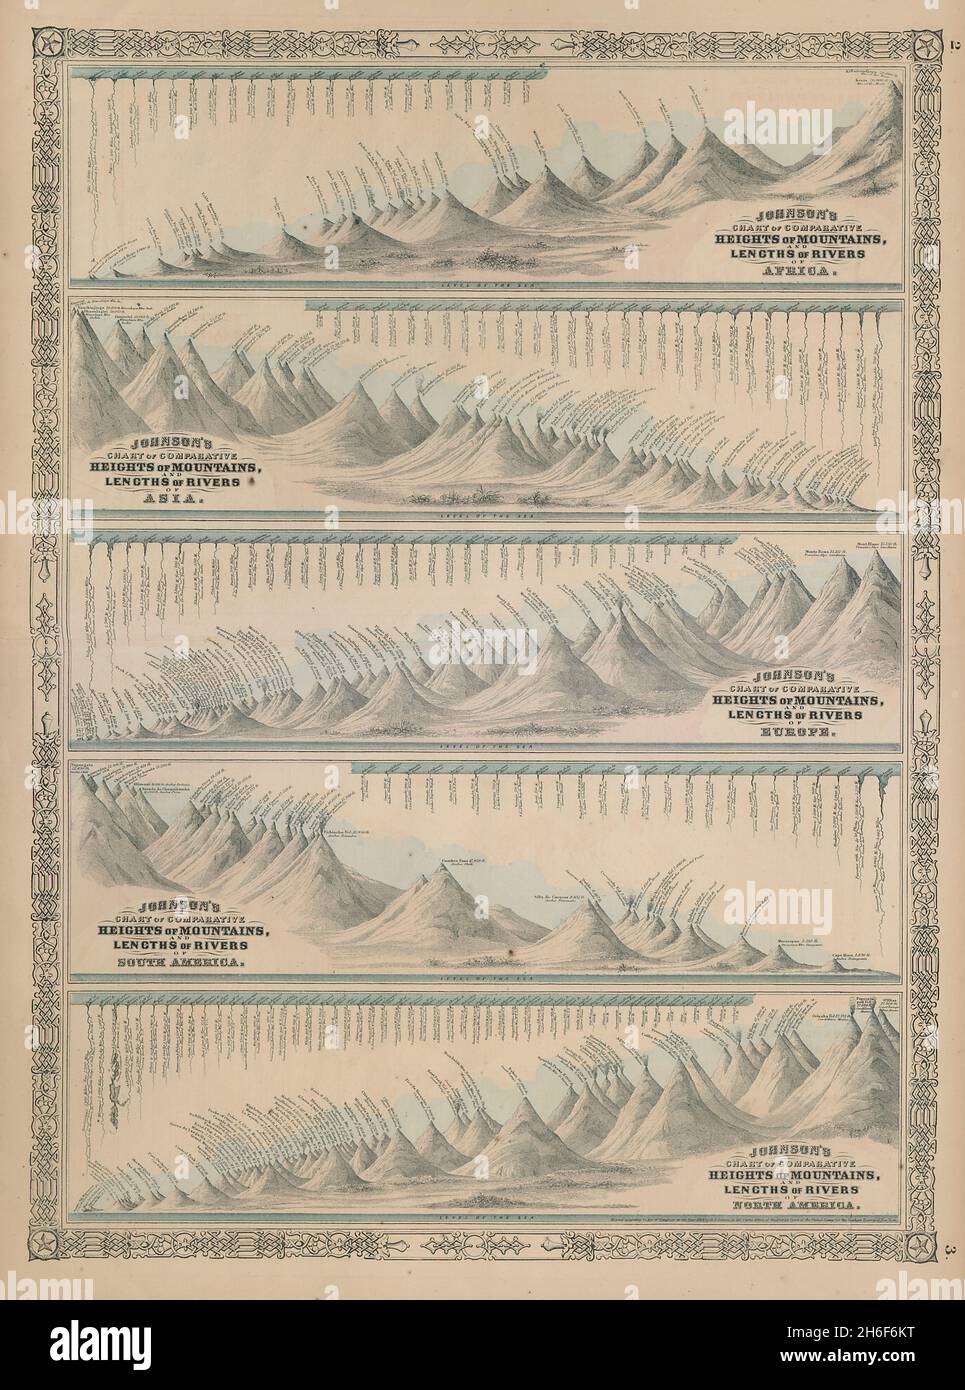 Johnson's Mountains. Afrika, Asien, Europa, Süd- und Nordamerika 1865 Karte Stockfoto